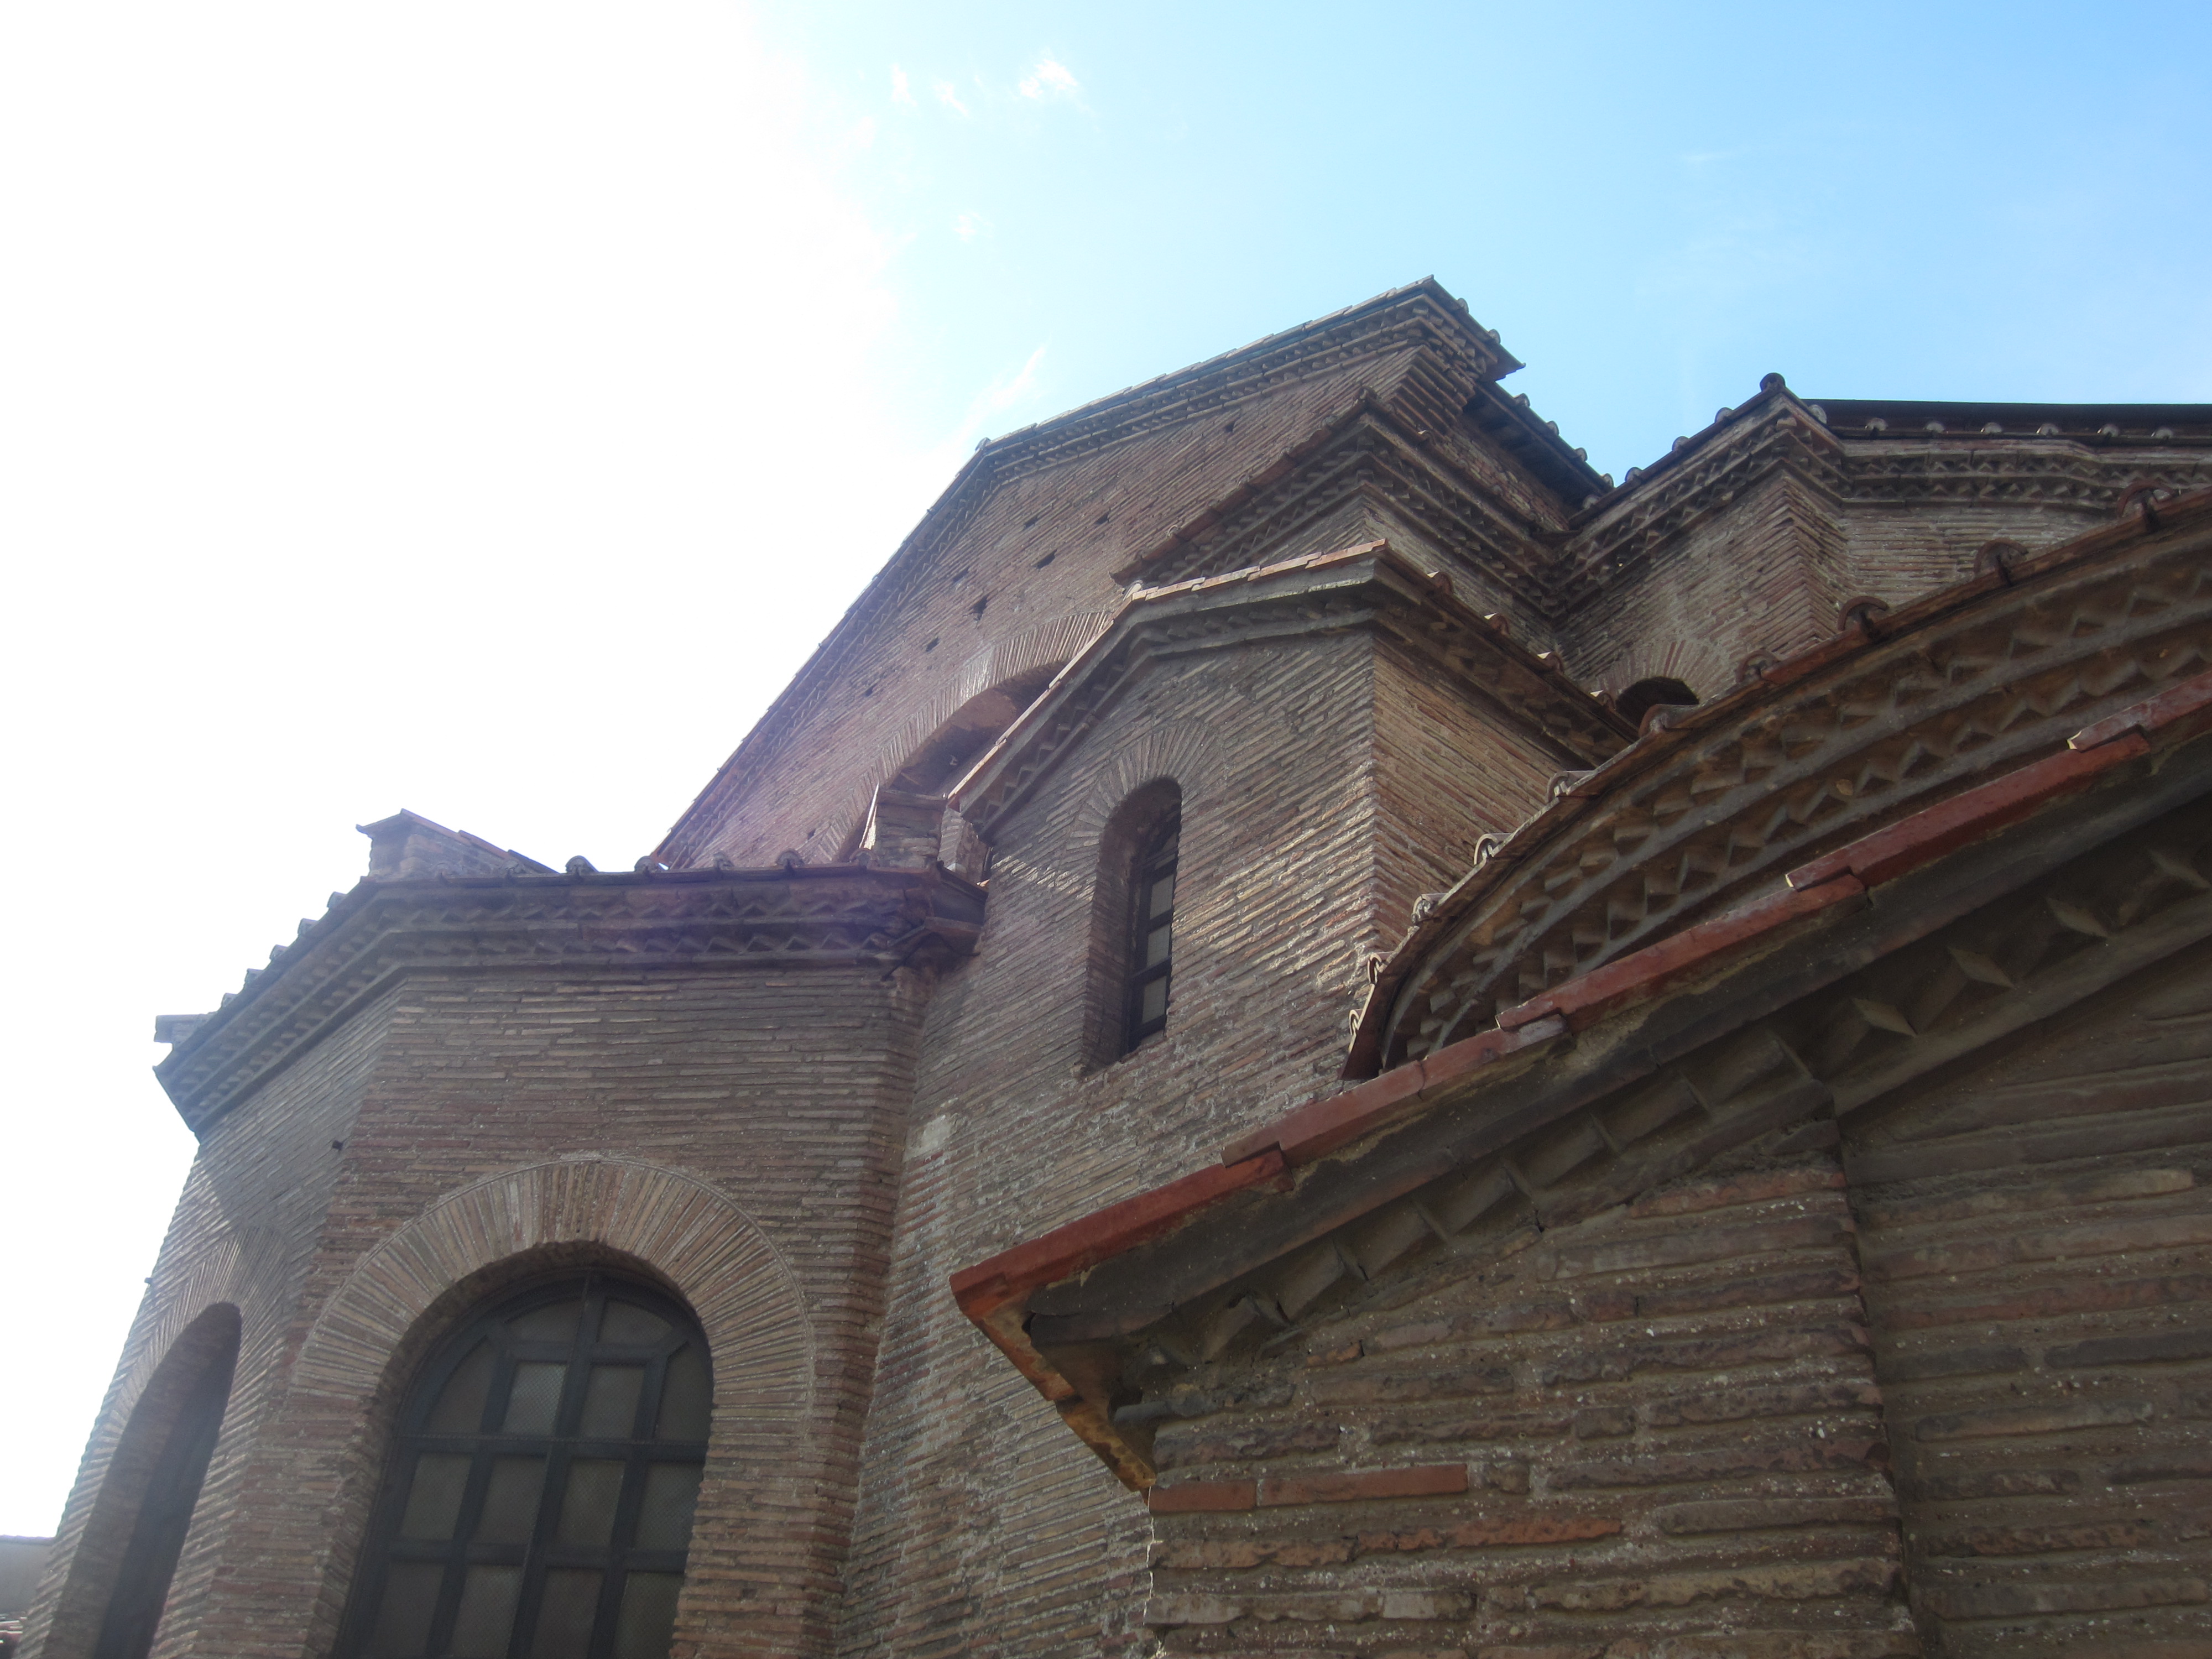 foto: https://upload.wikimedia.org/wikipedia/commons/8/87/Basilica_di_San_Vitale_-_dettaglio.JPG